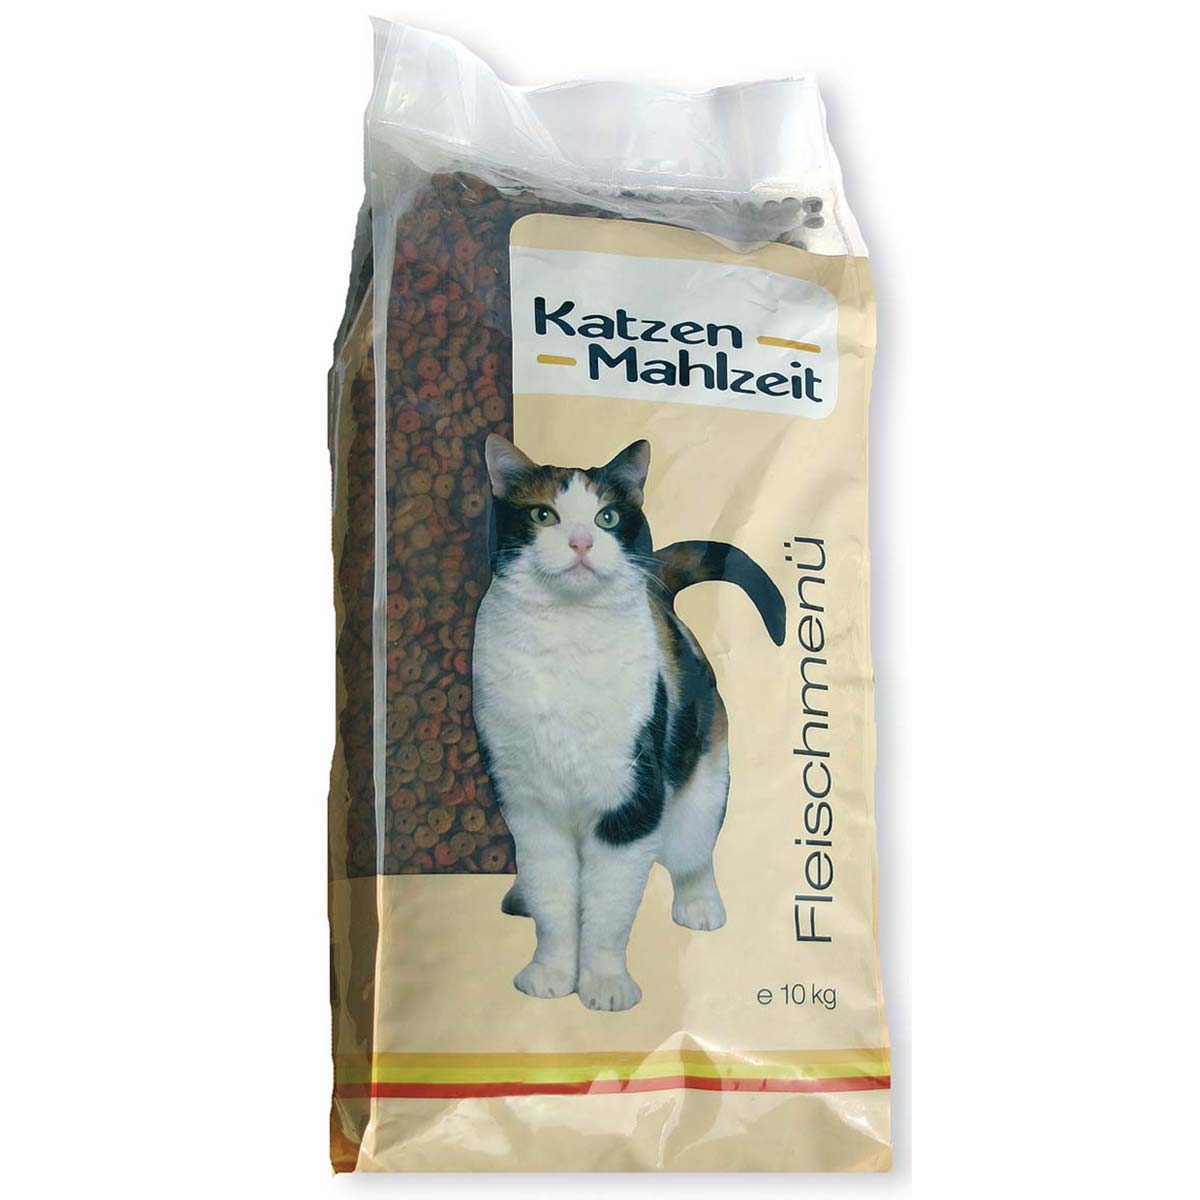 Deuka Katzen Mahlzeit Crocchette per gatti con carne 10 kg